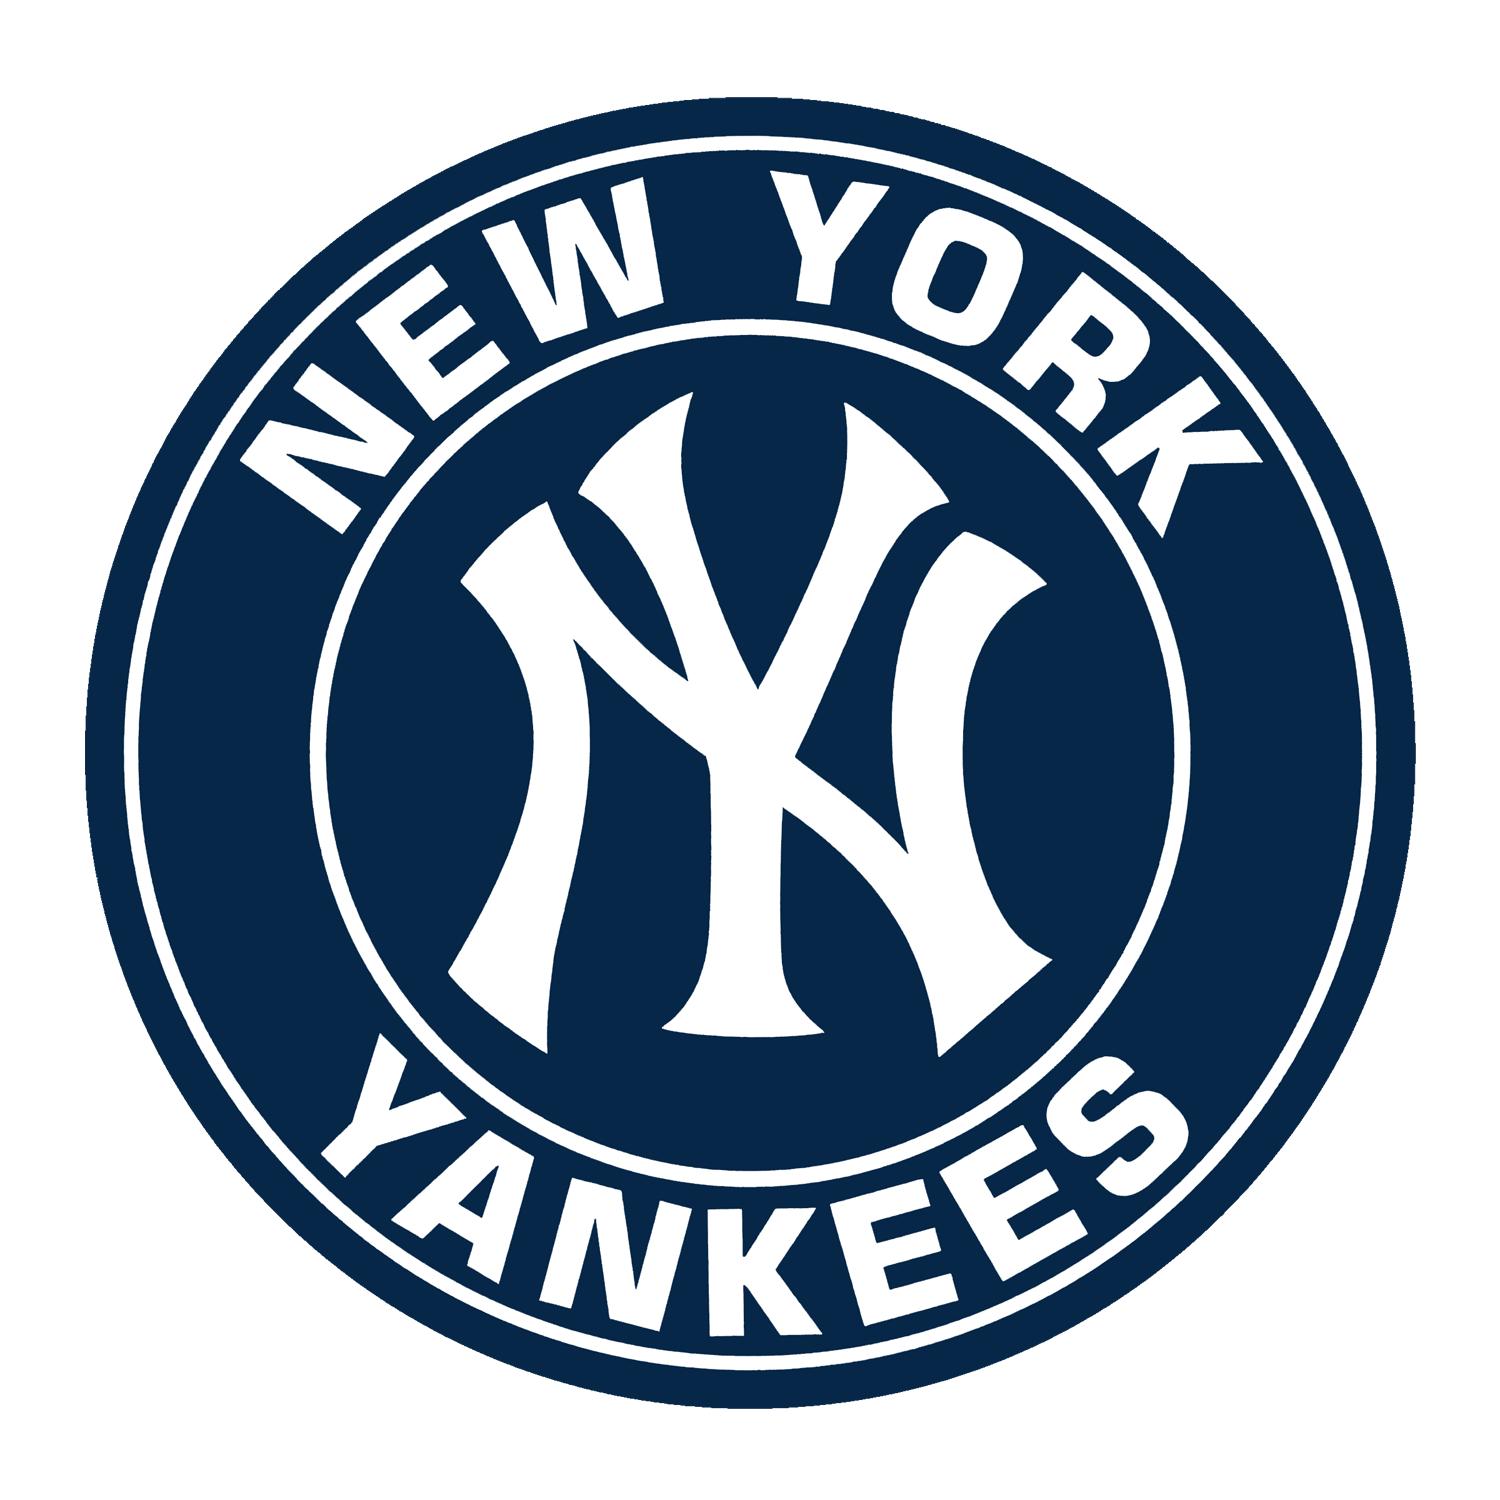 New York Yankees (baseball team)